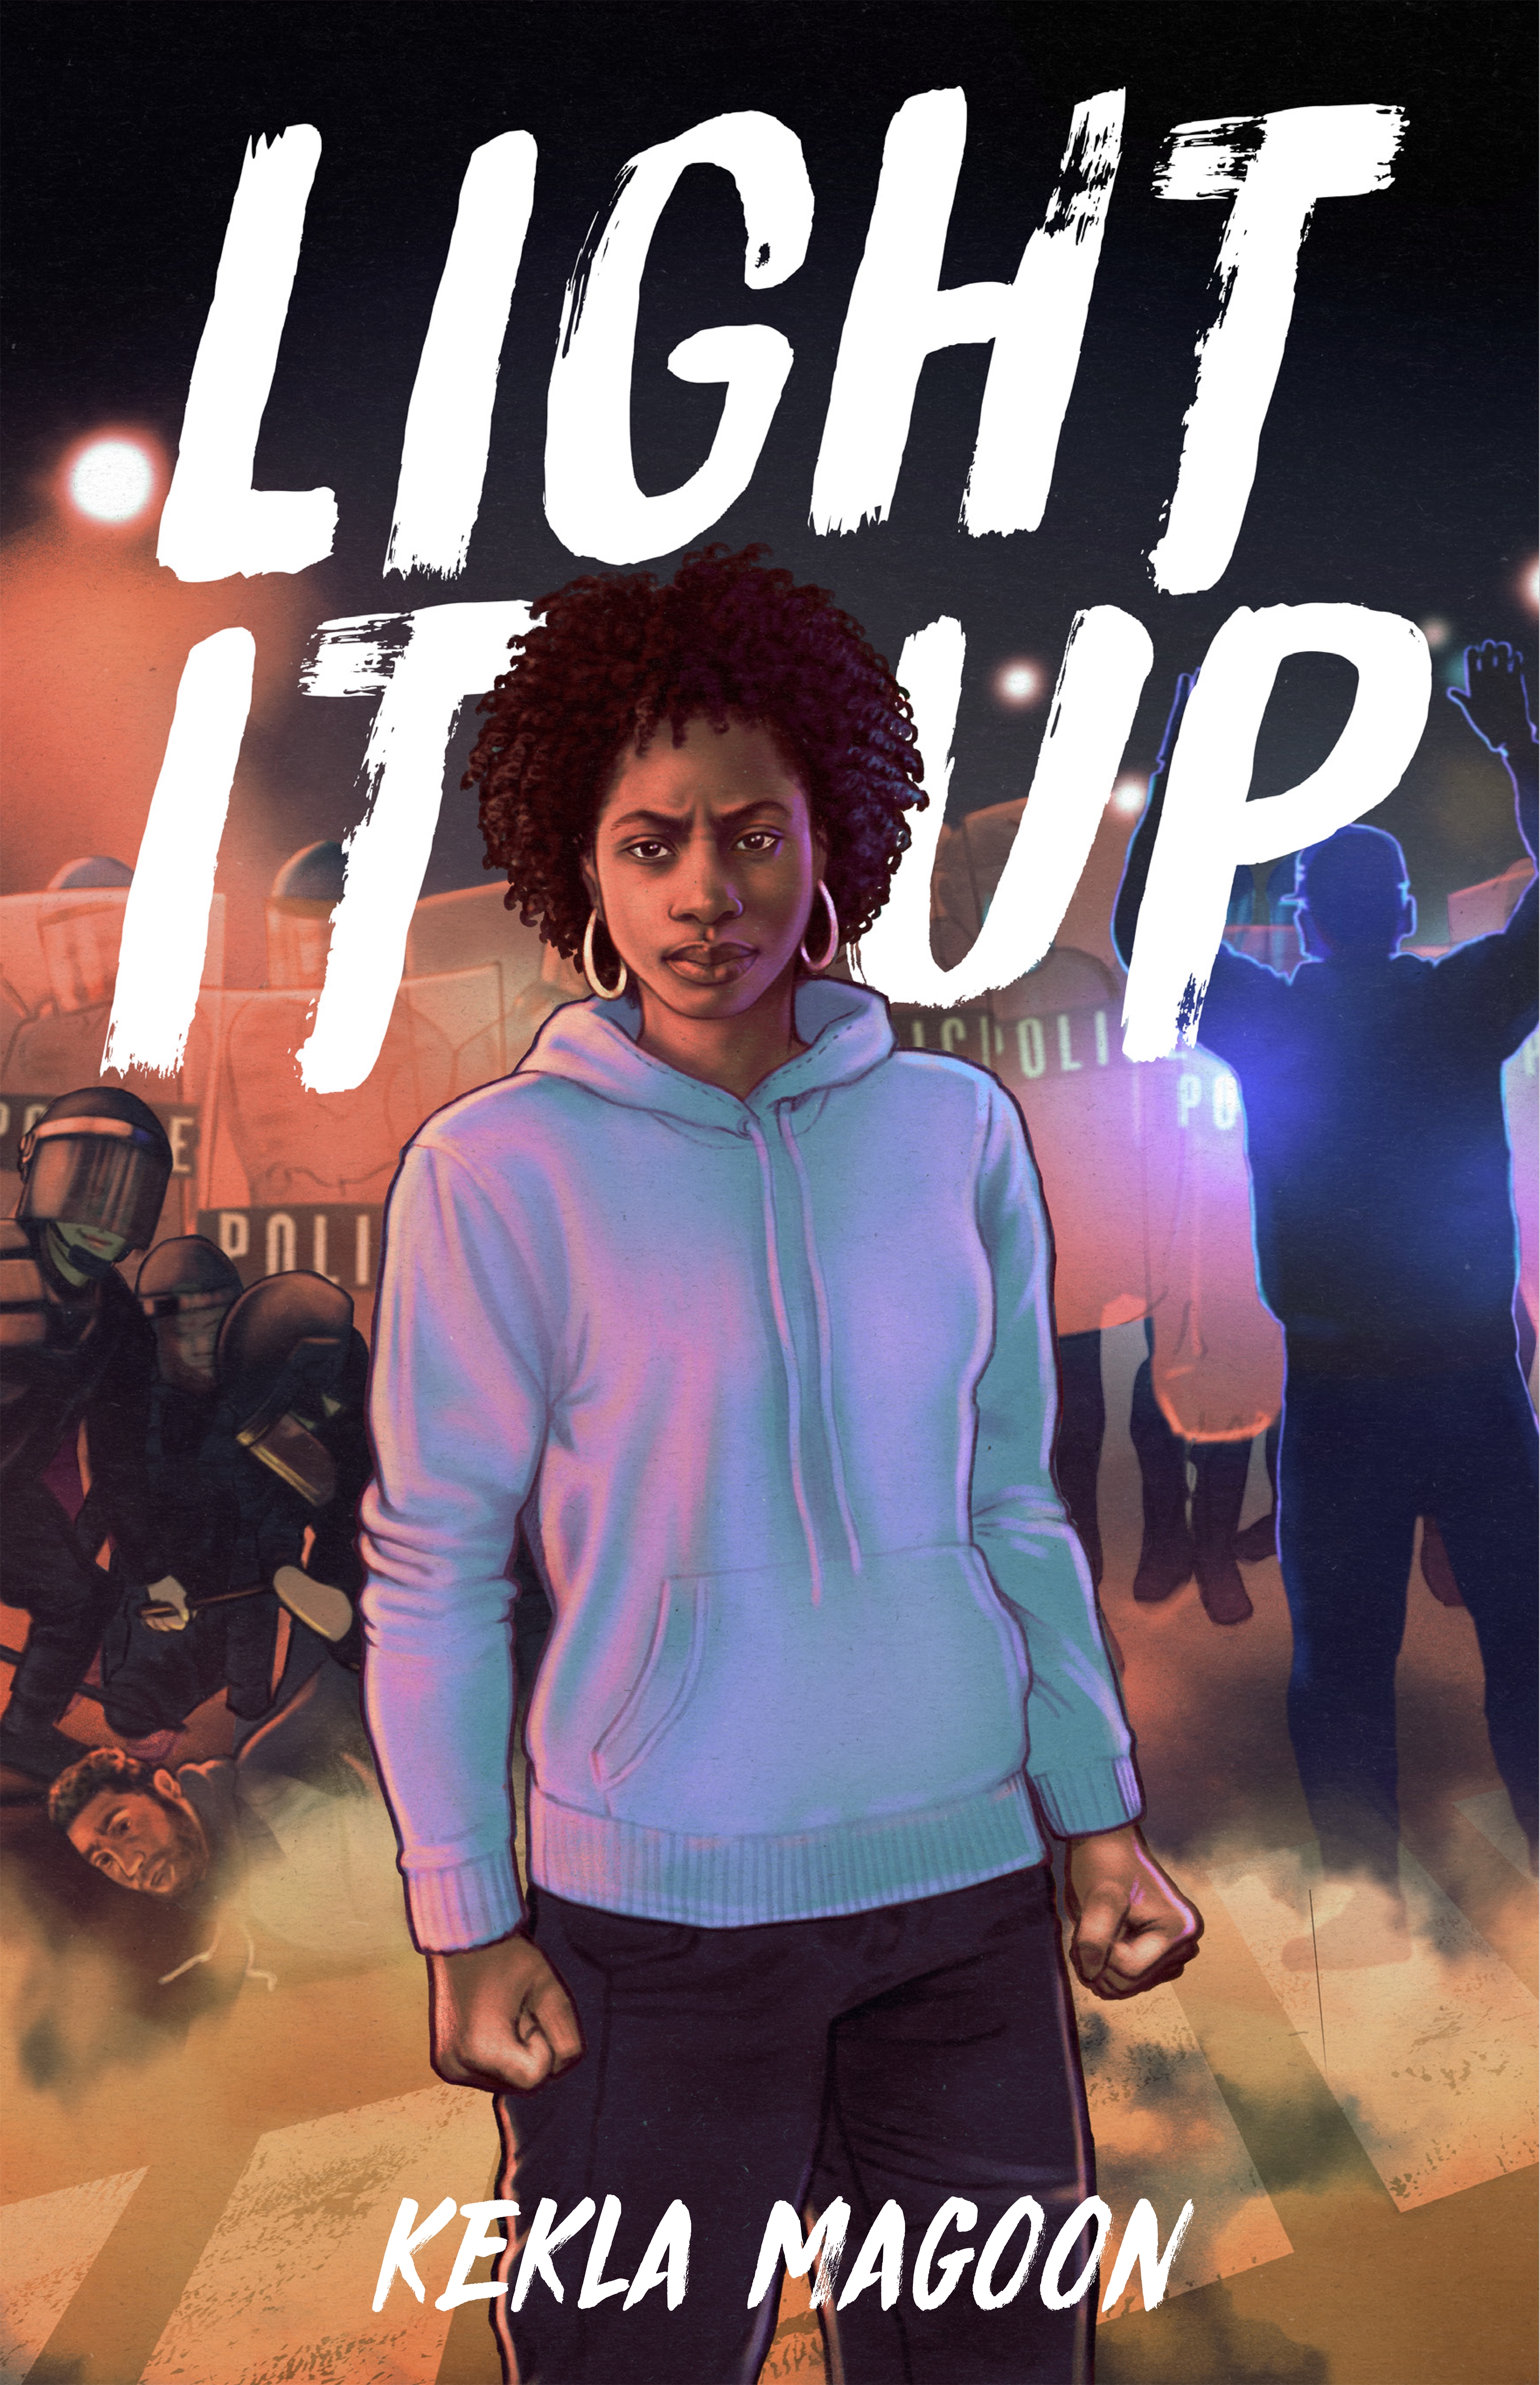 Book “Light It Up” by Kekla Magoon — October 22, 2019